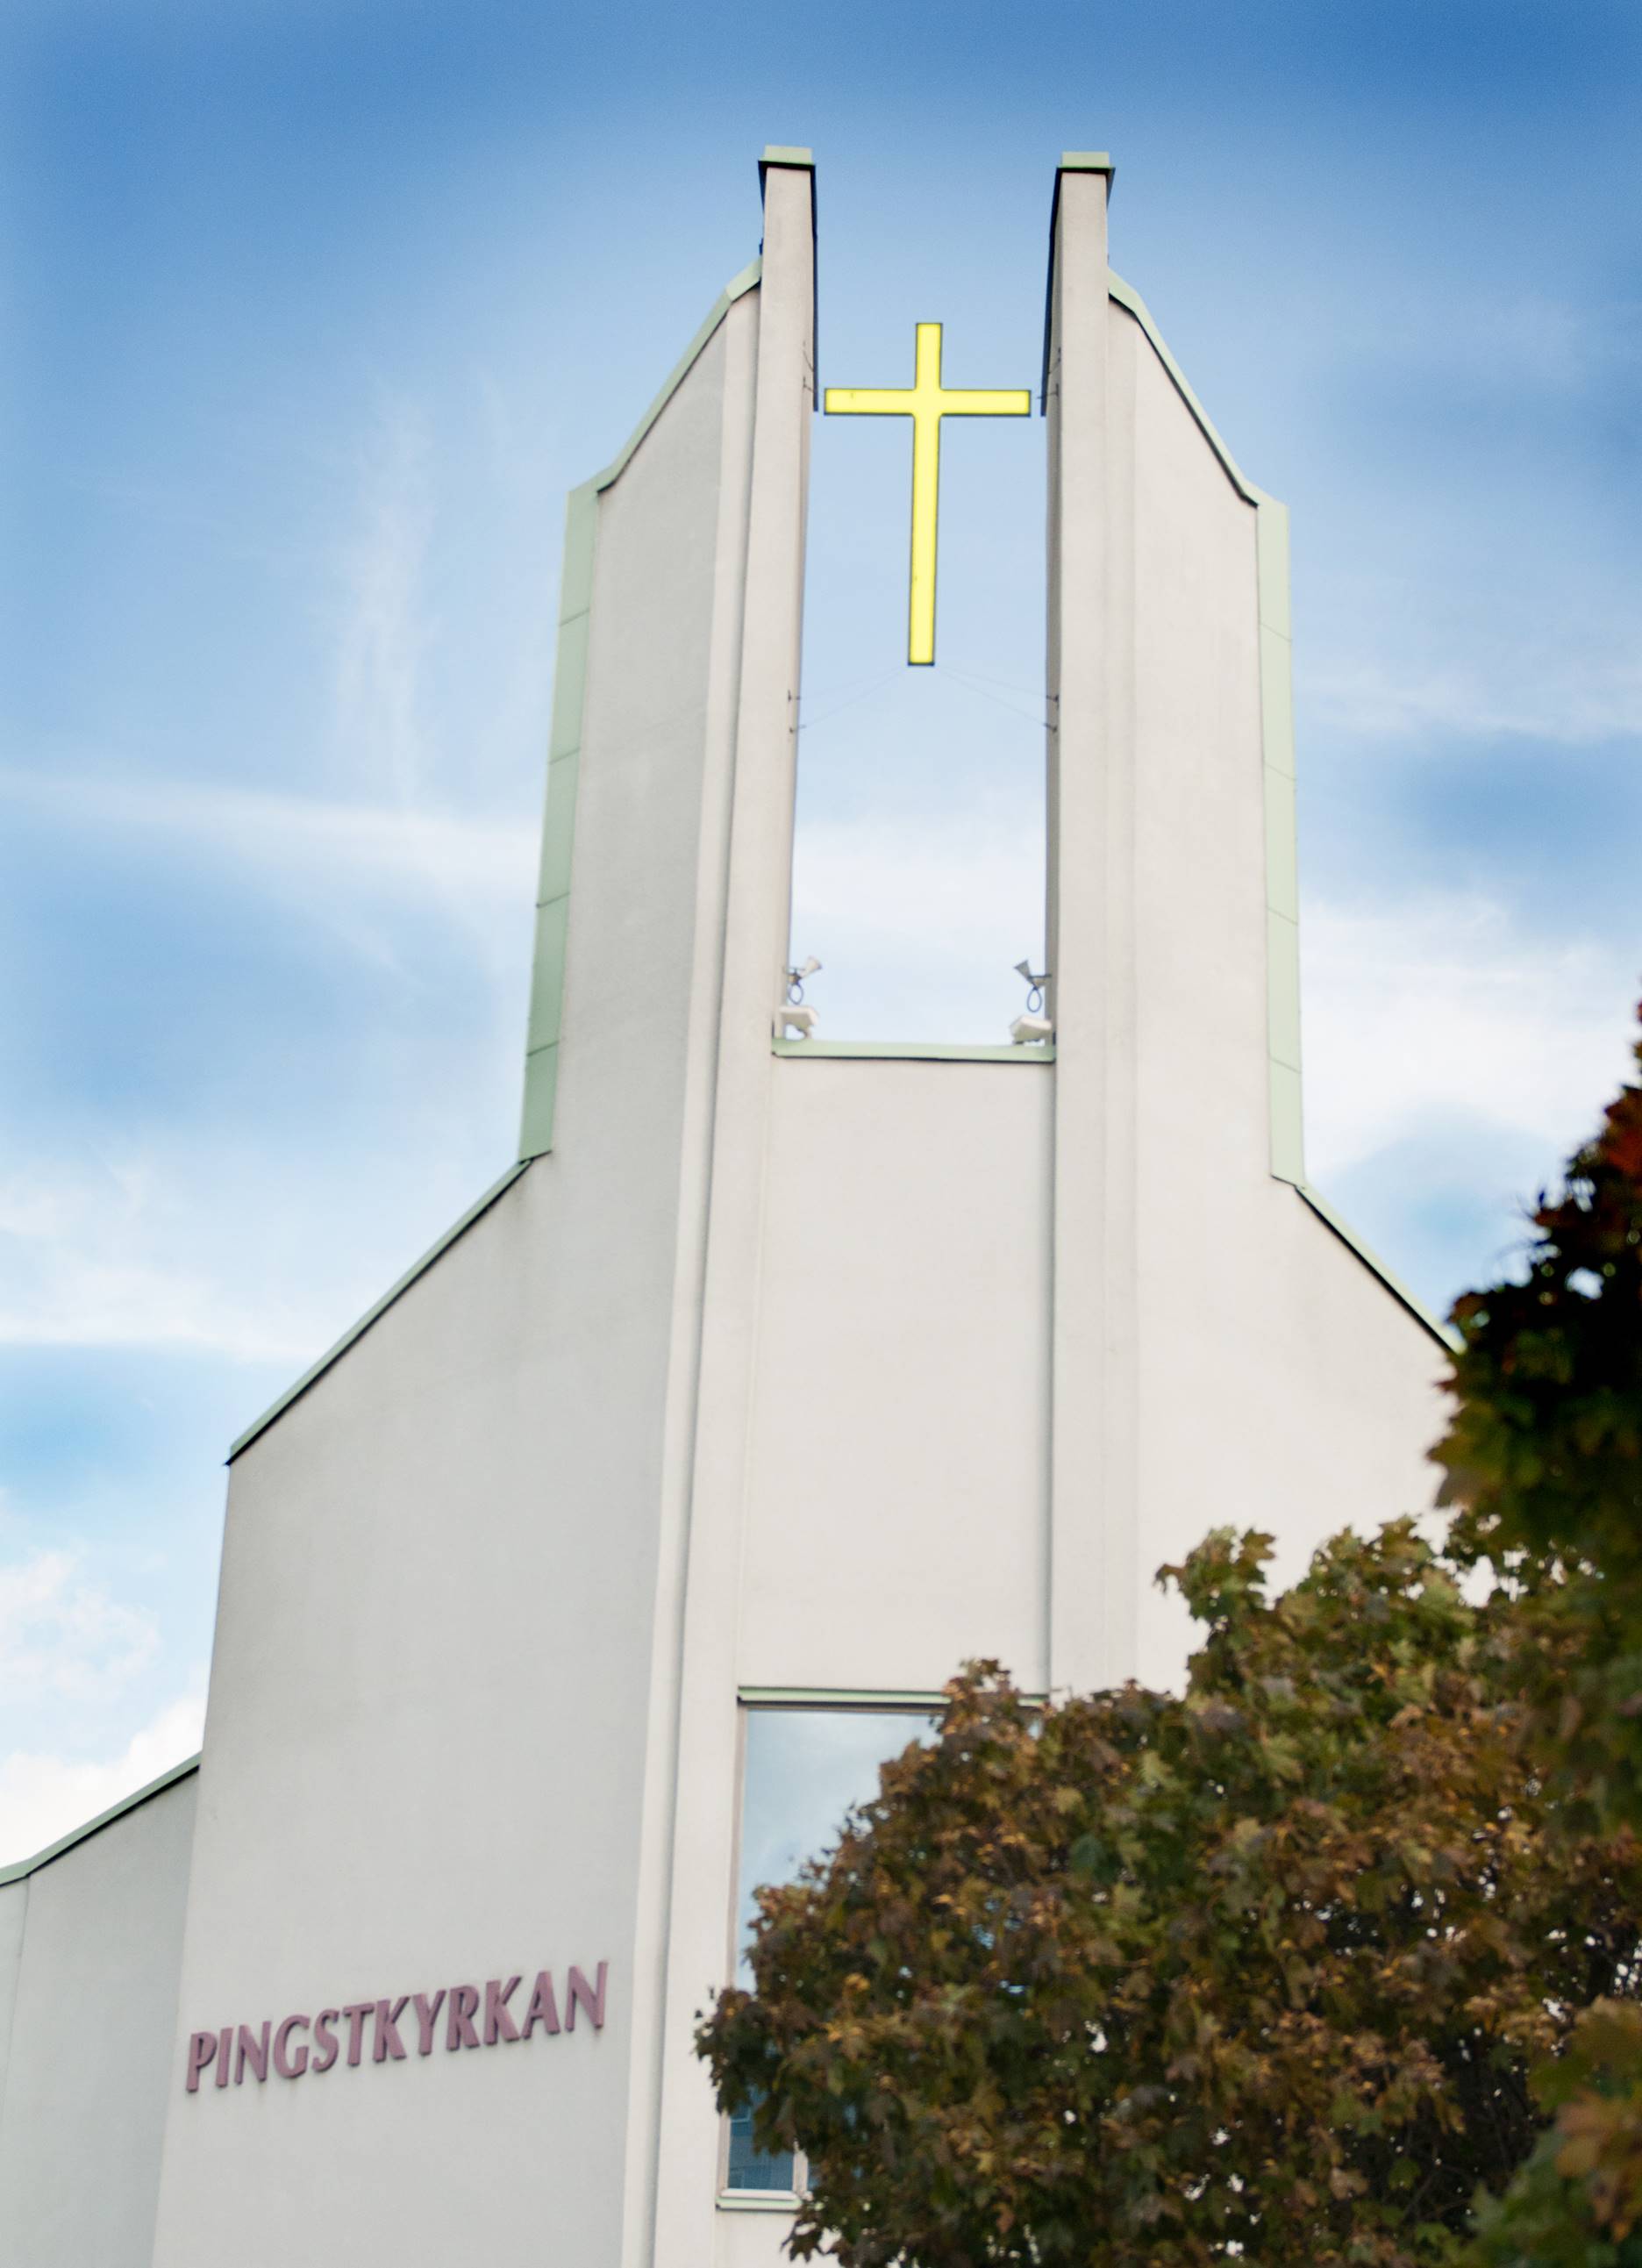 Pingstkyrkan Eskilstuna